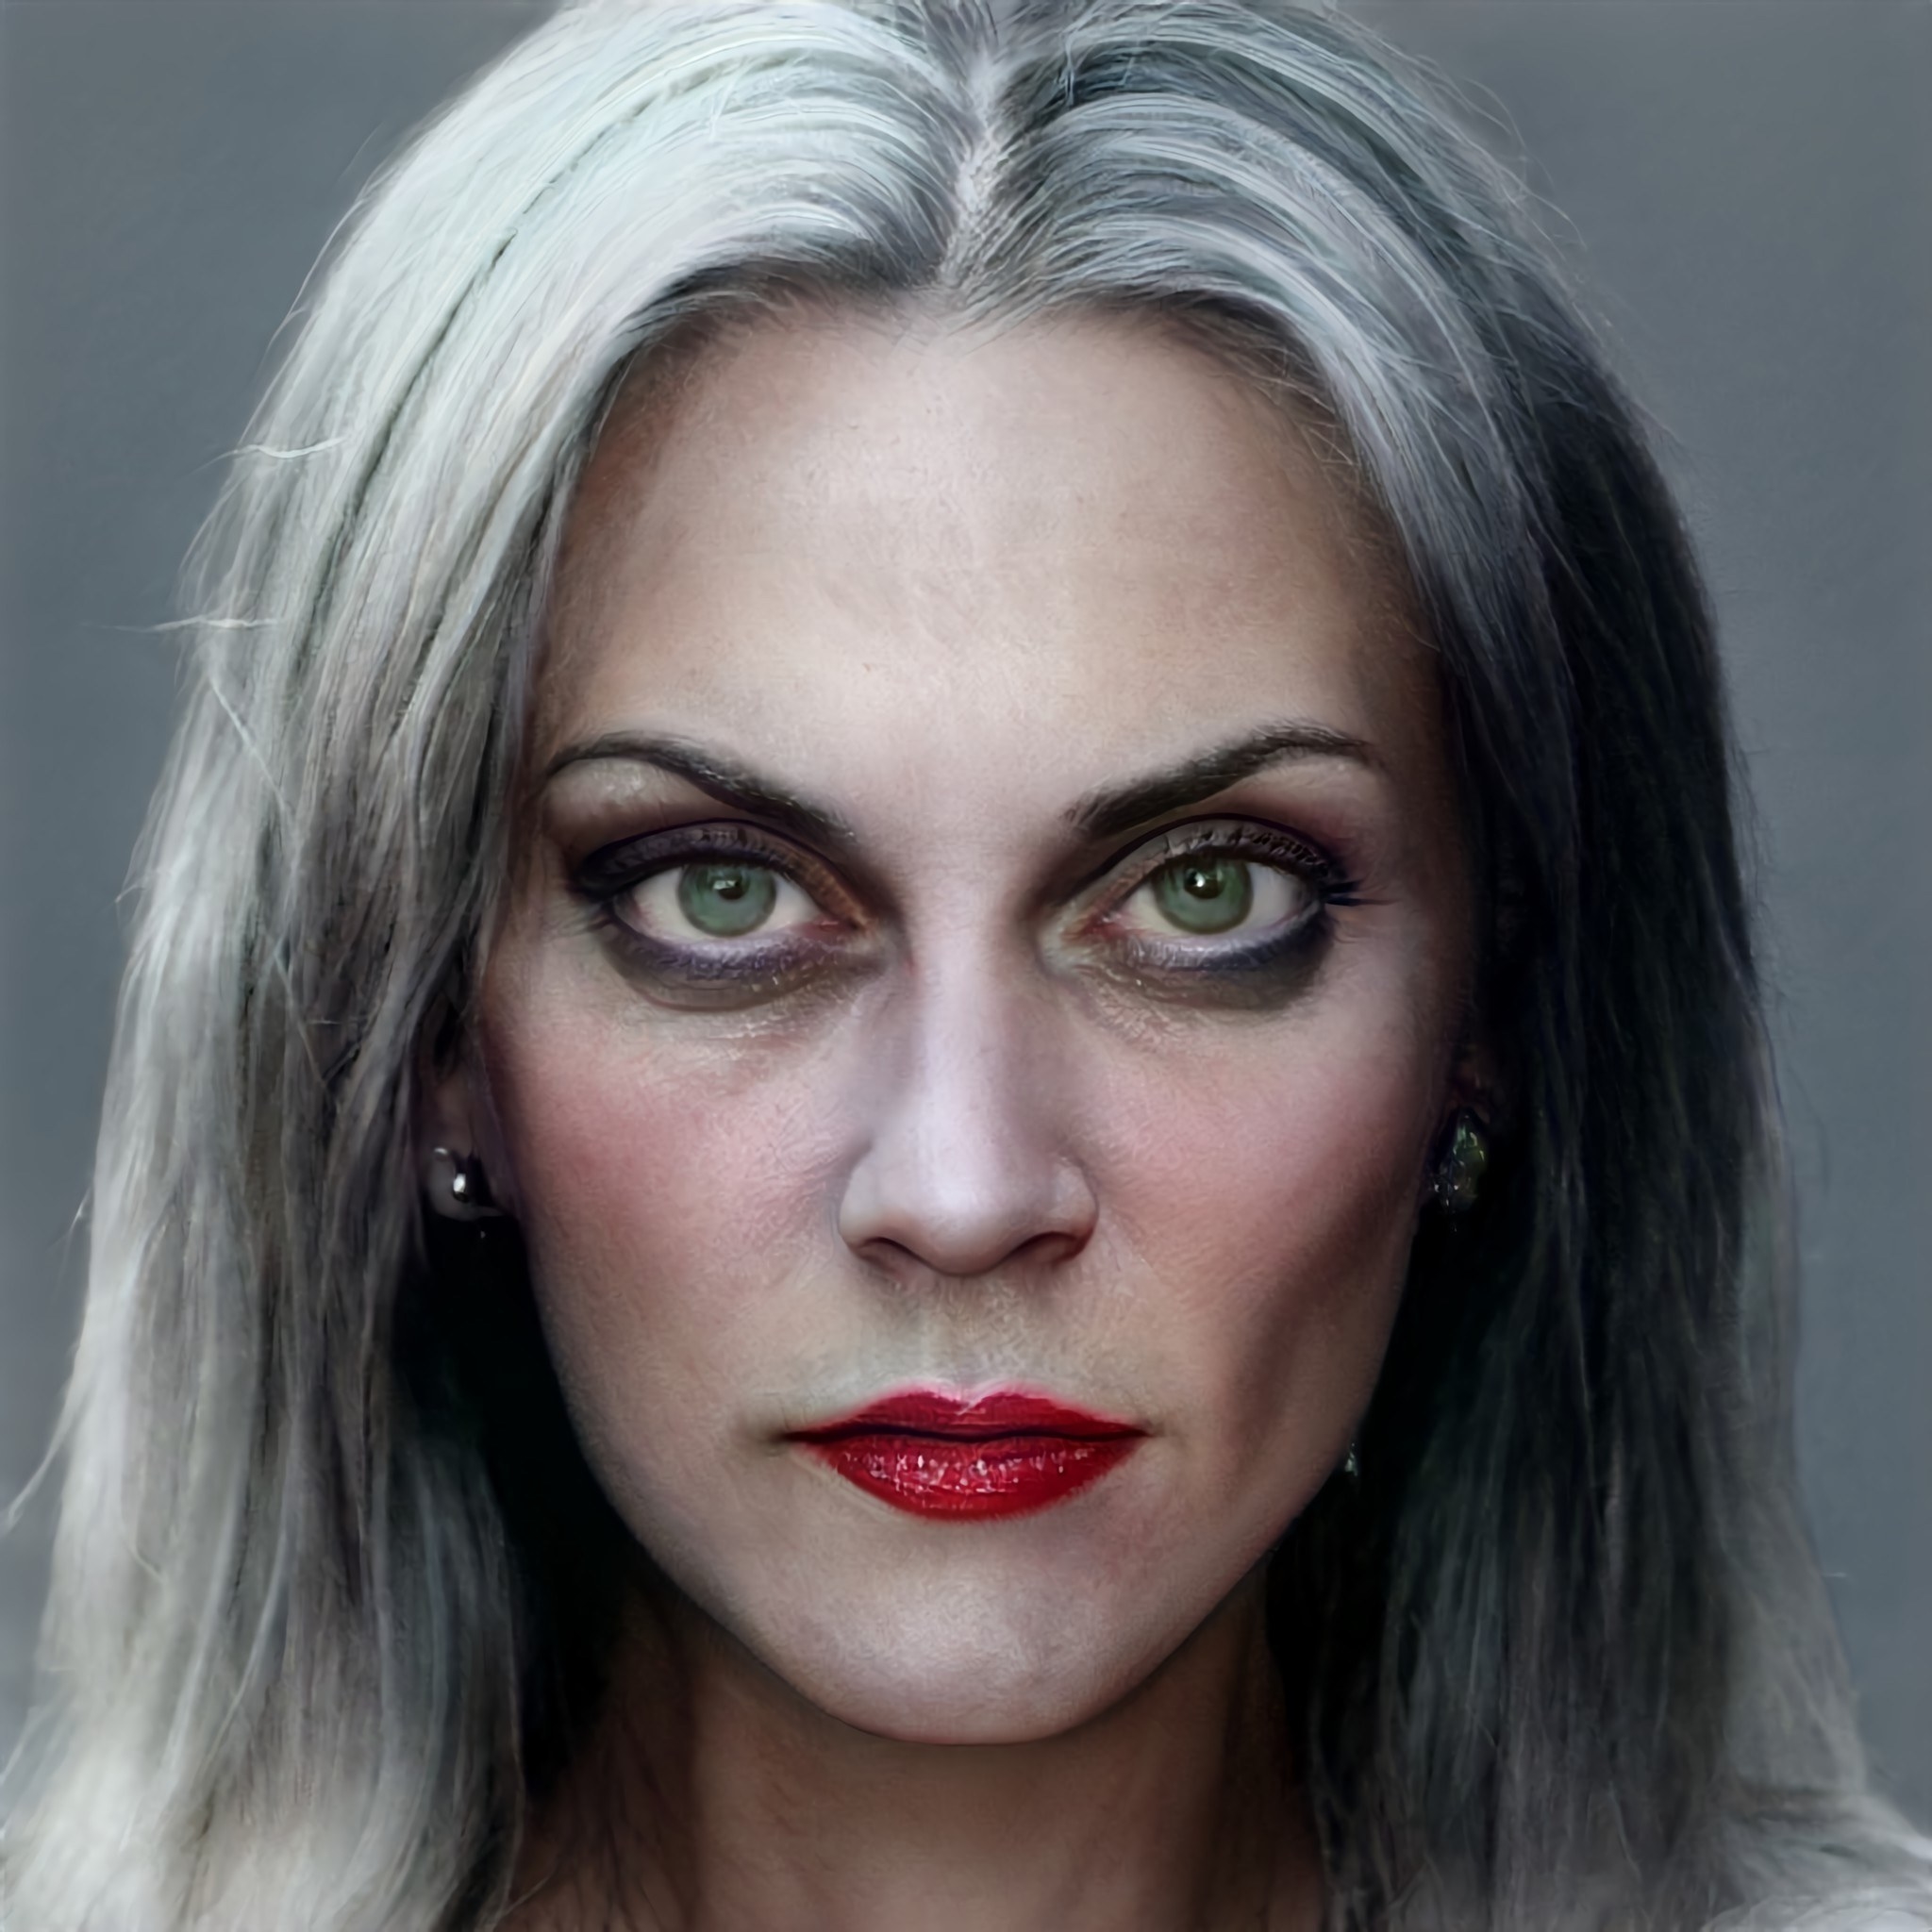 cruella with big eyes and white-grey hair